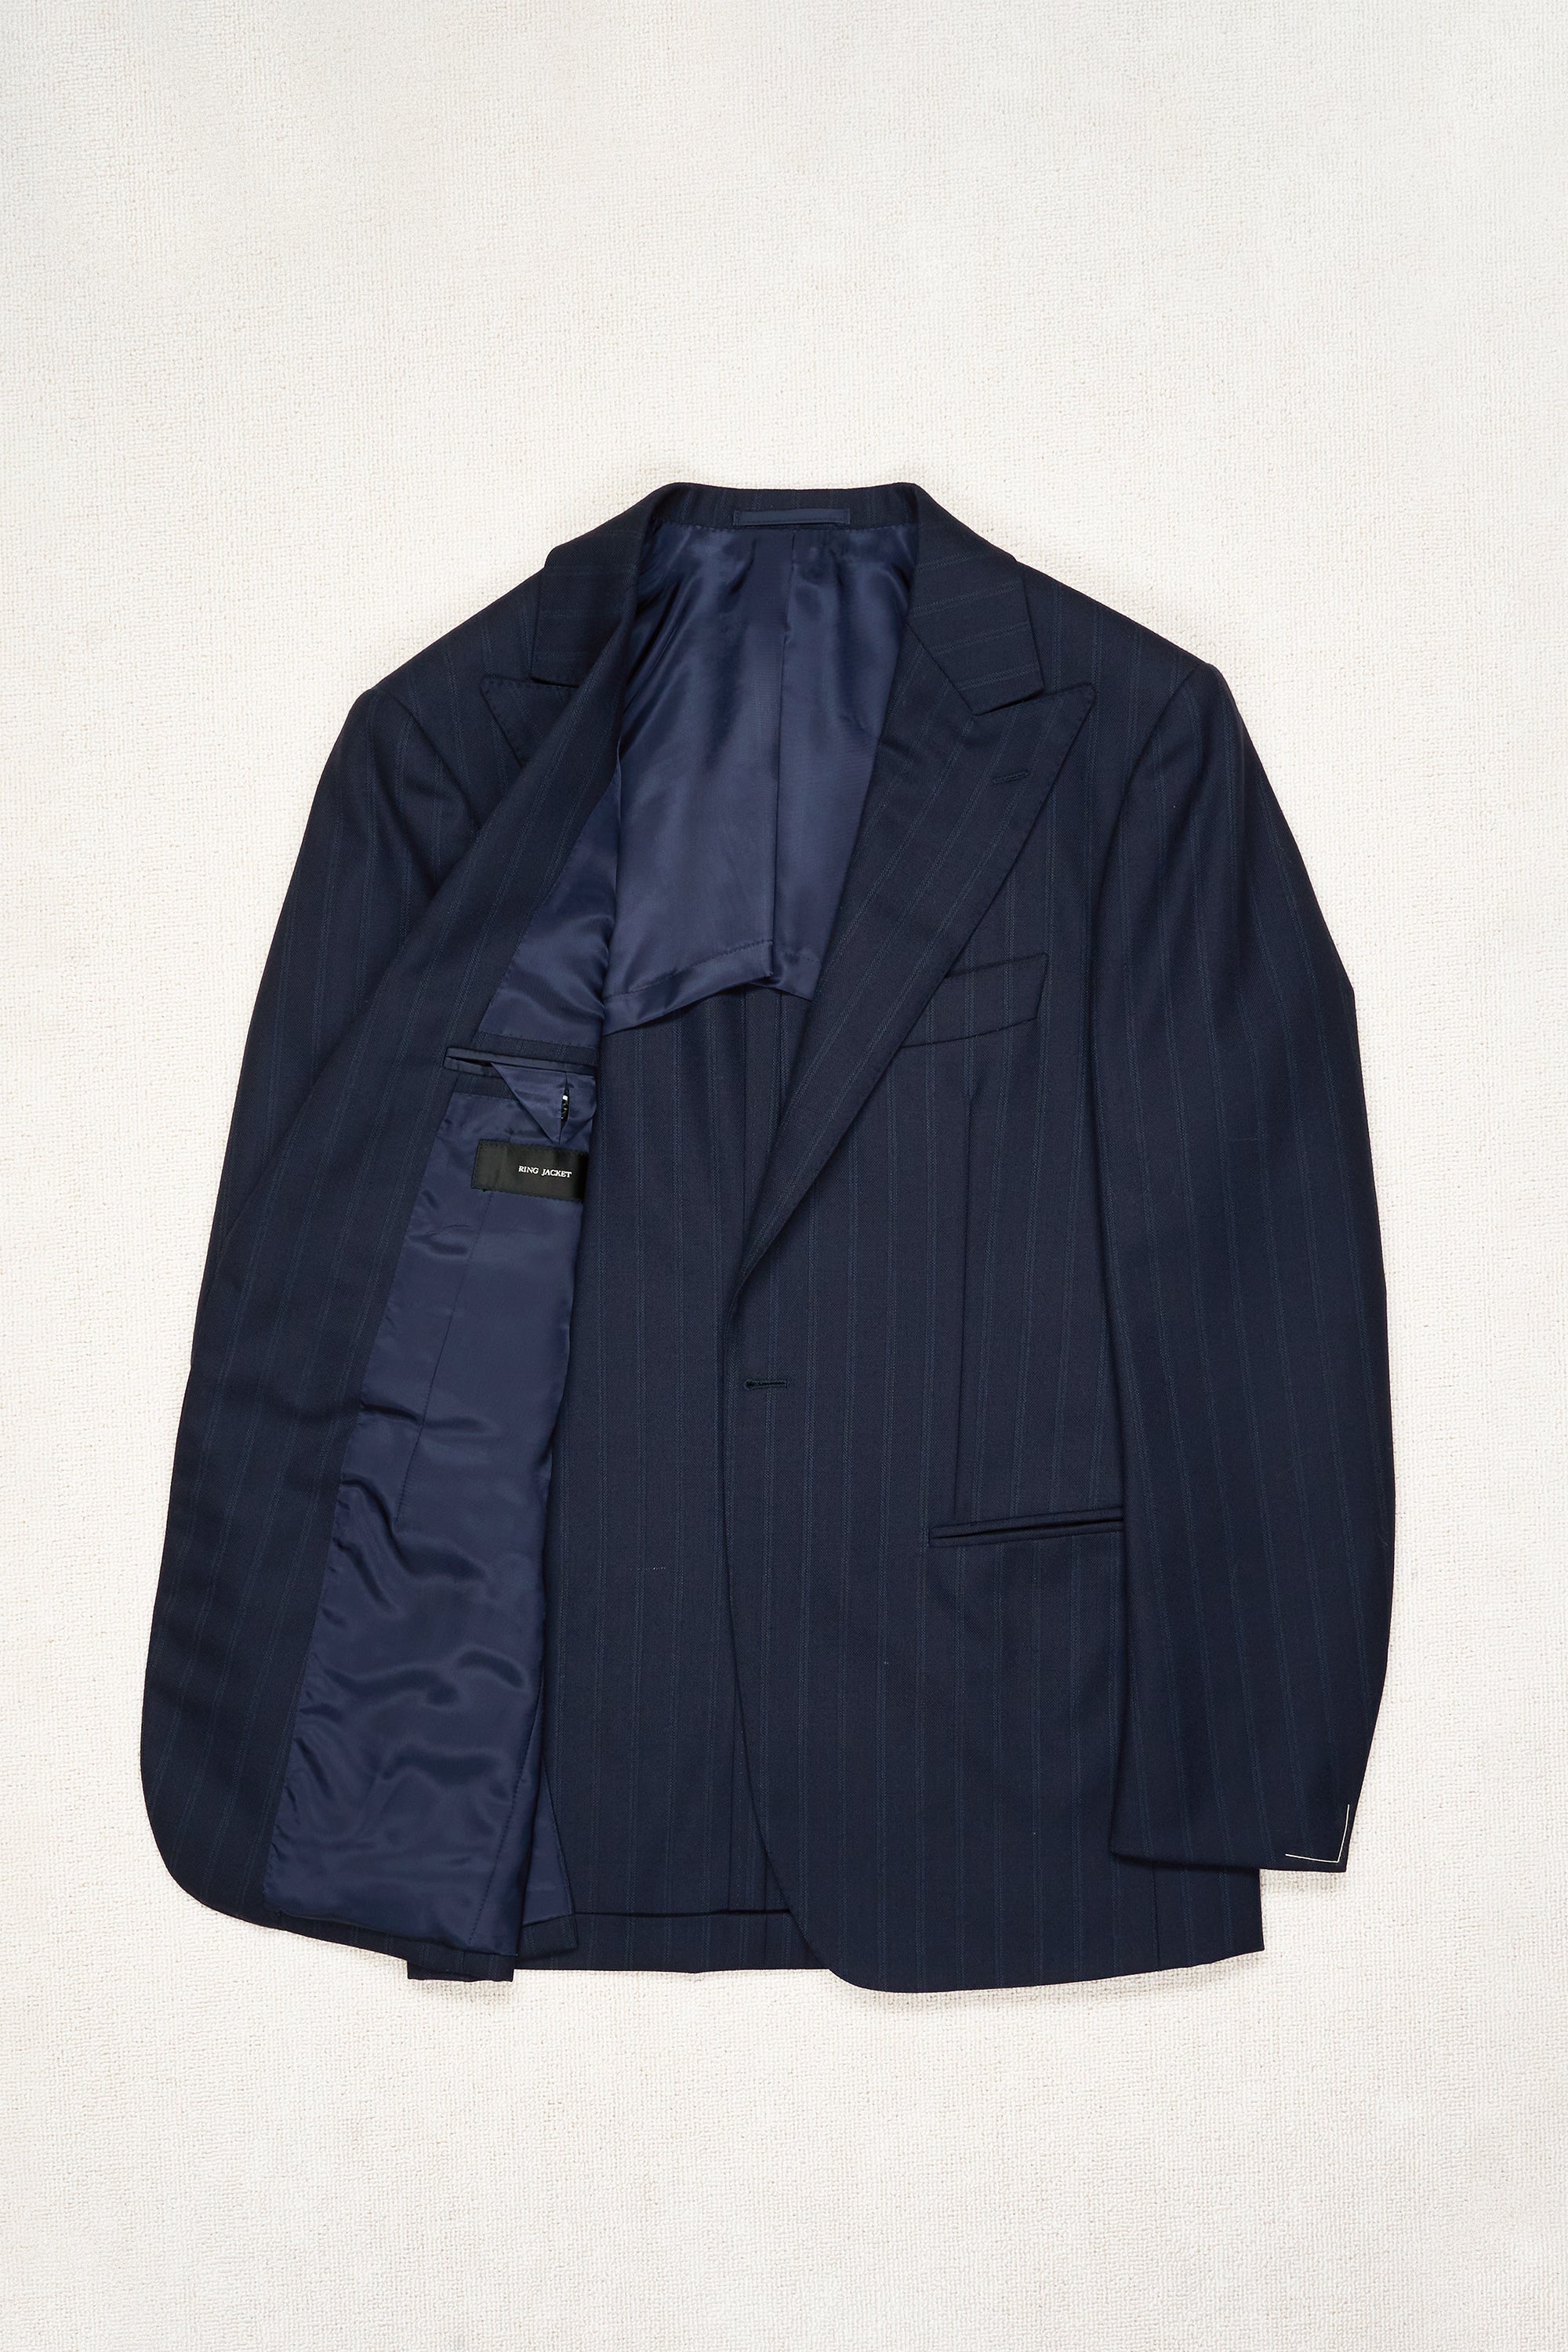 Ring Jacket AMJ04 Navy Wool Pinstripe Sport Coat with Waistcoat